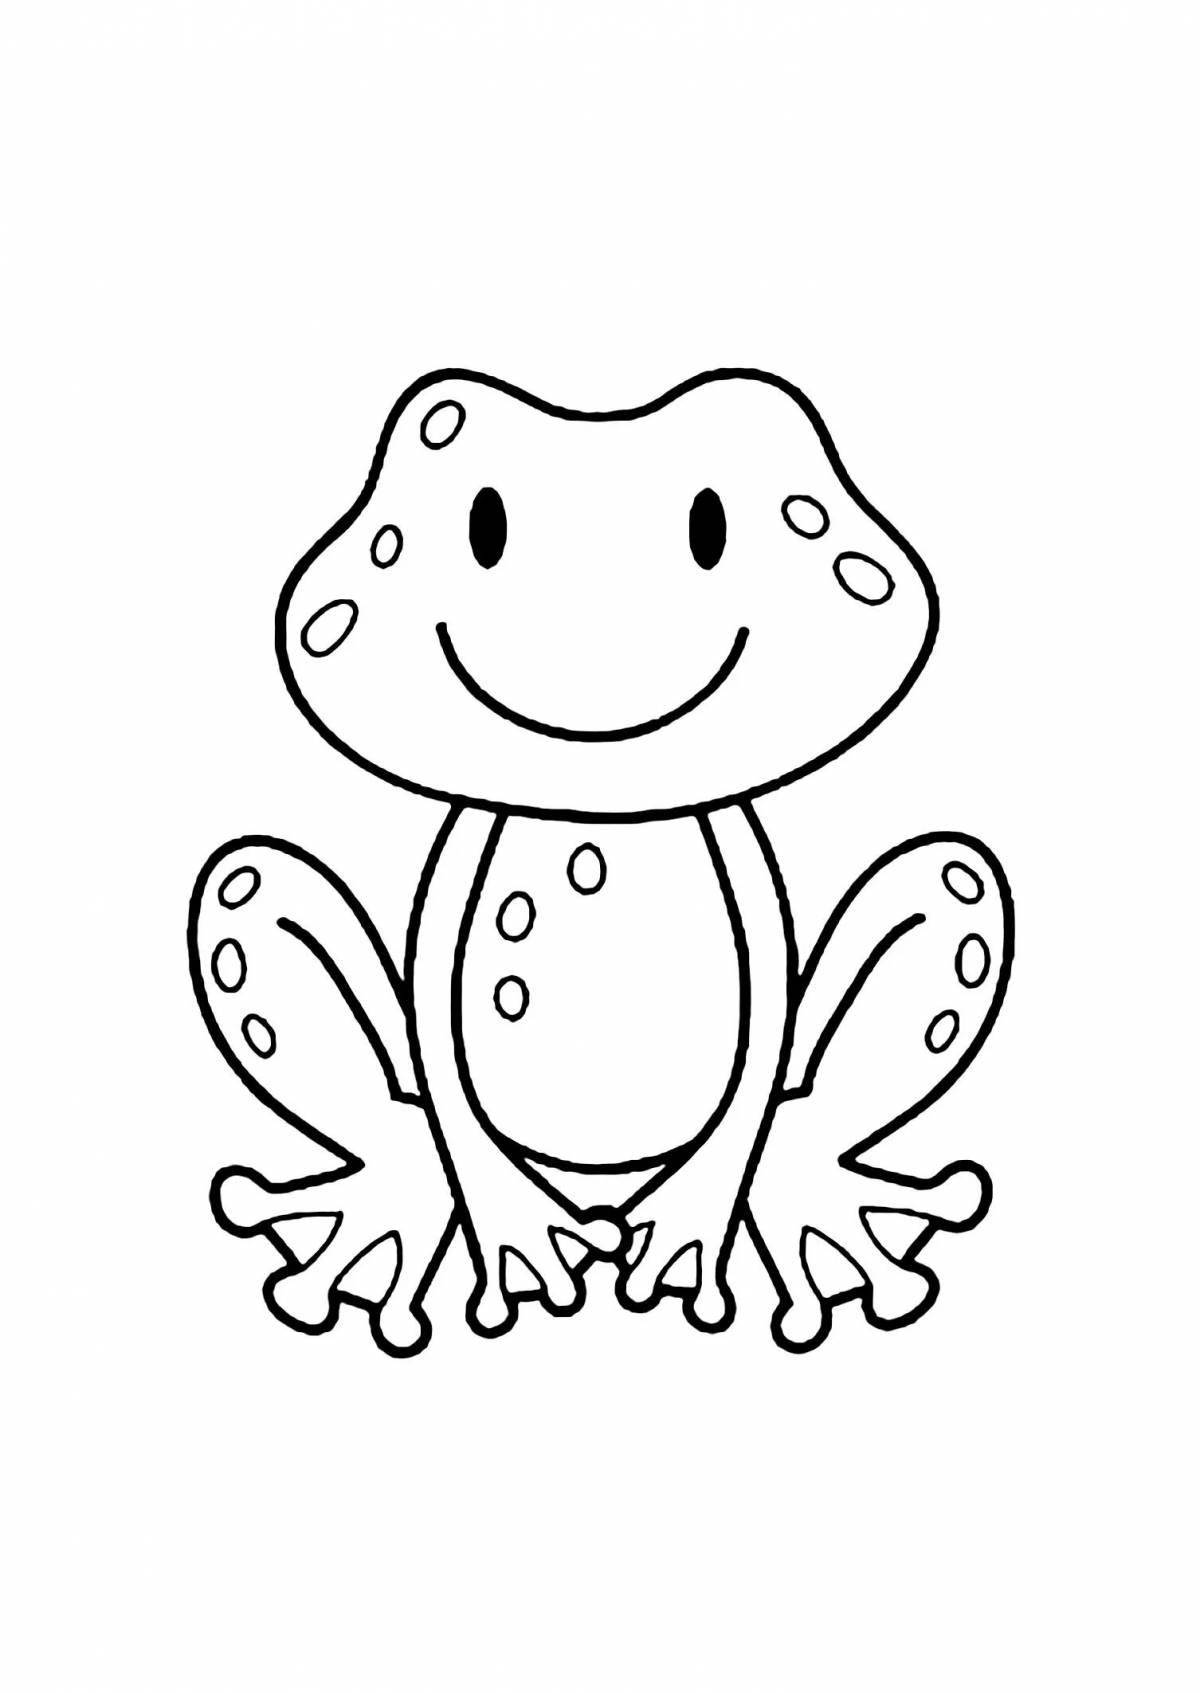 An interesting cartoon coloring frog